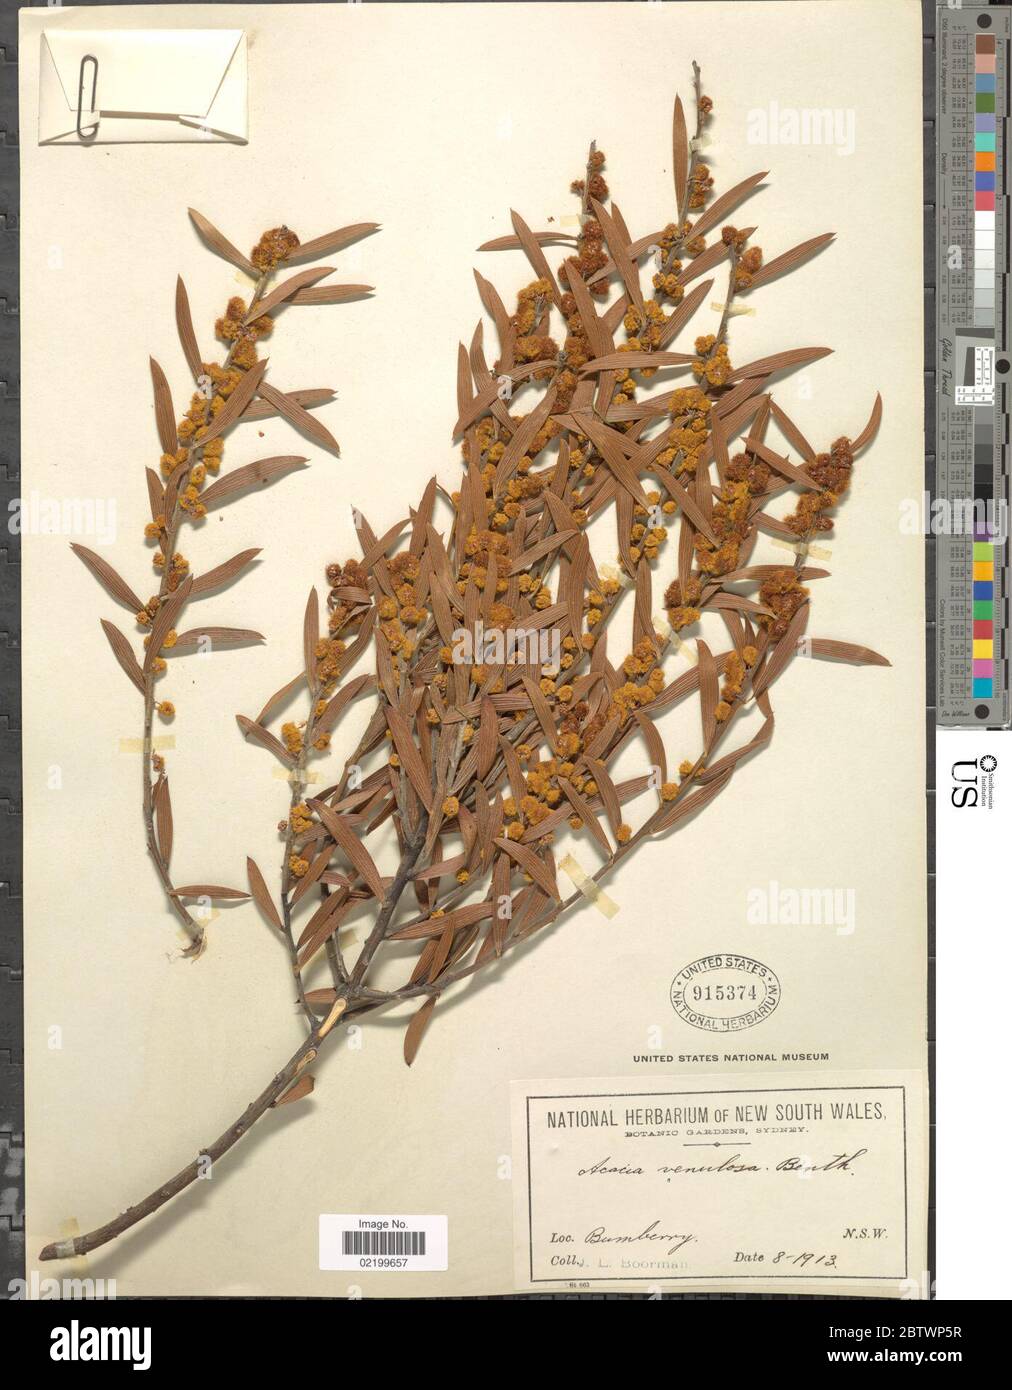 Acacia venulosa Benth. Stock Photo